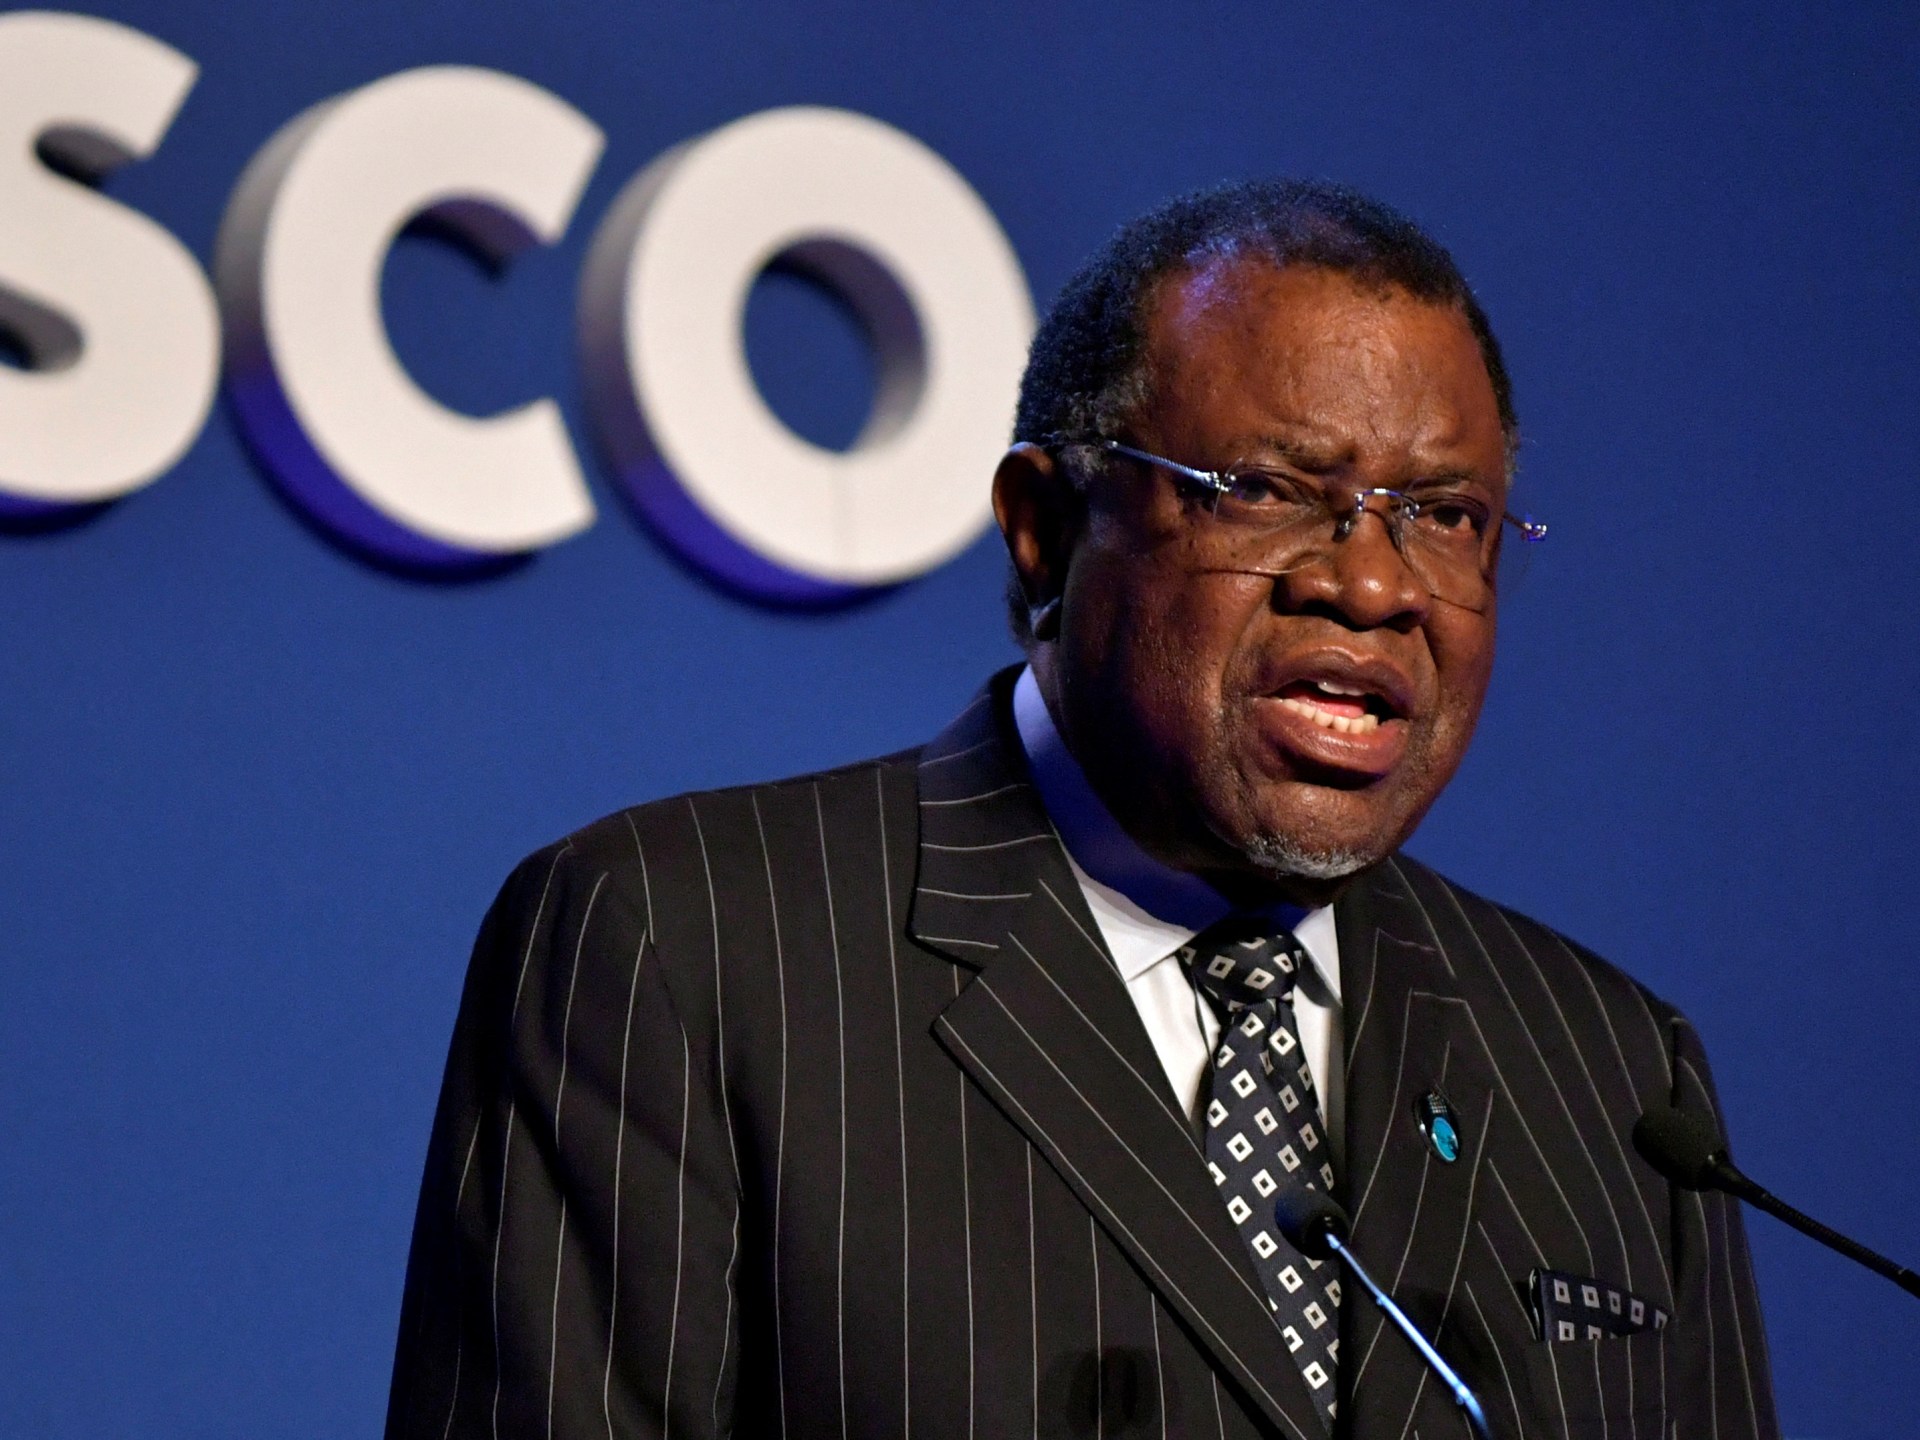 Namibia’s President Hage Geingob dies aged 82 | Politics News